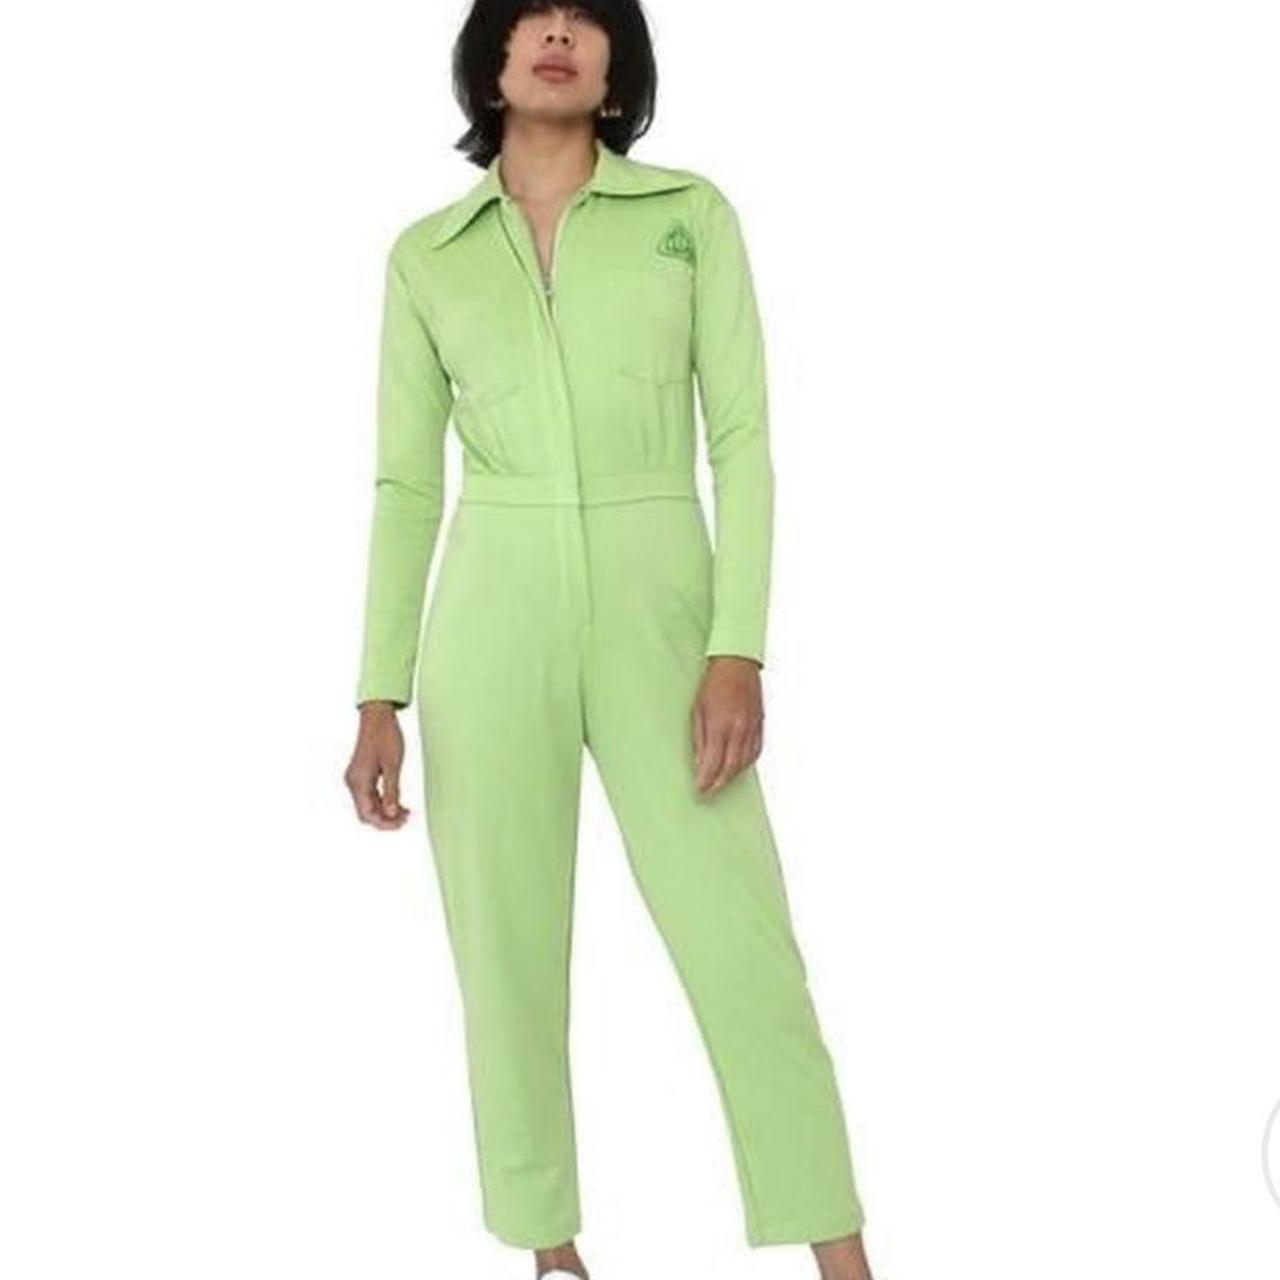 Melody Ehsani Women's Green Jumpsuit (4)